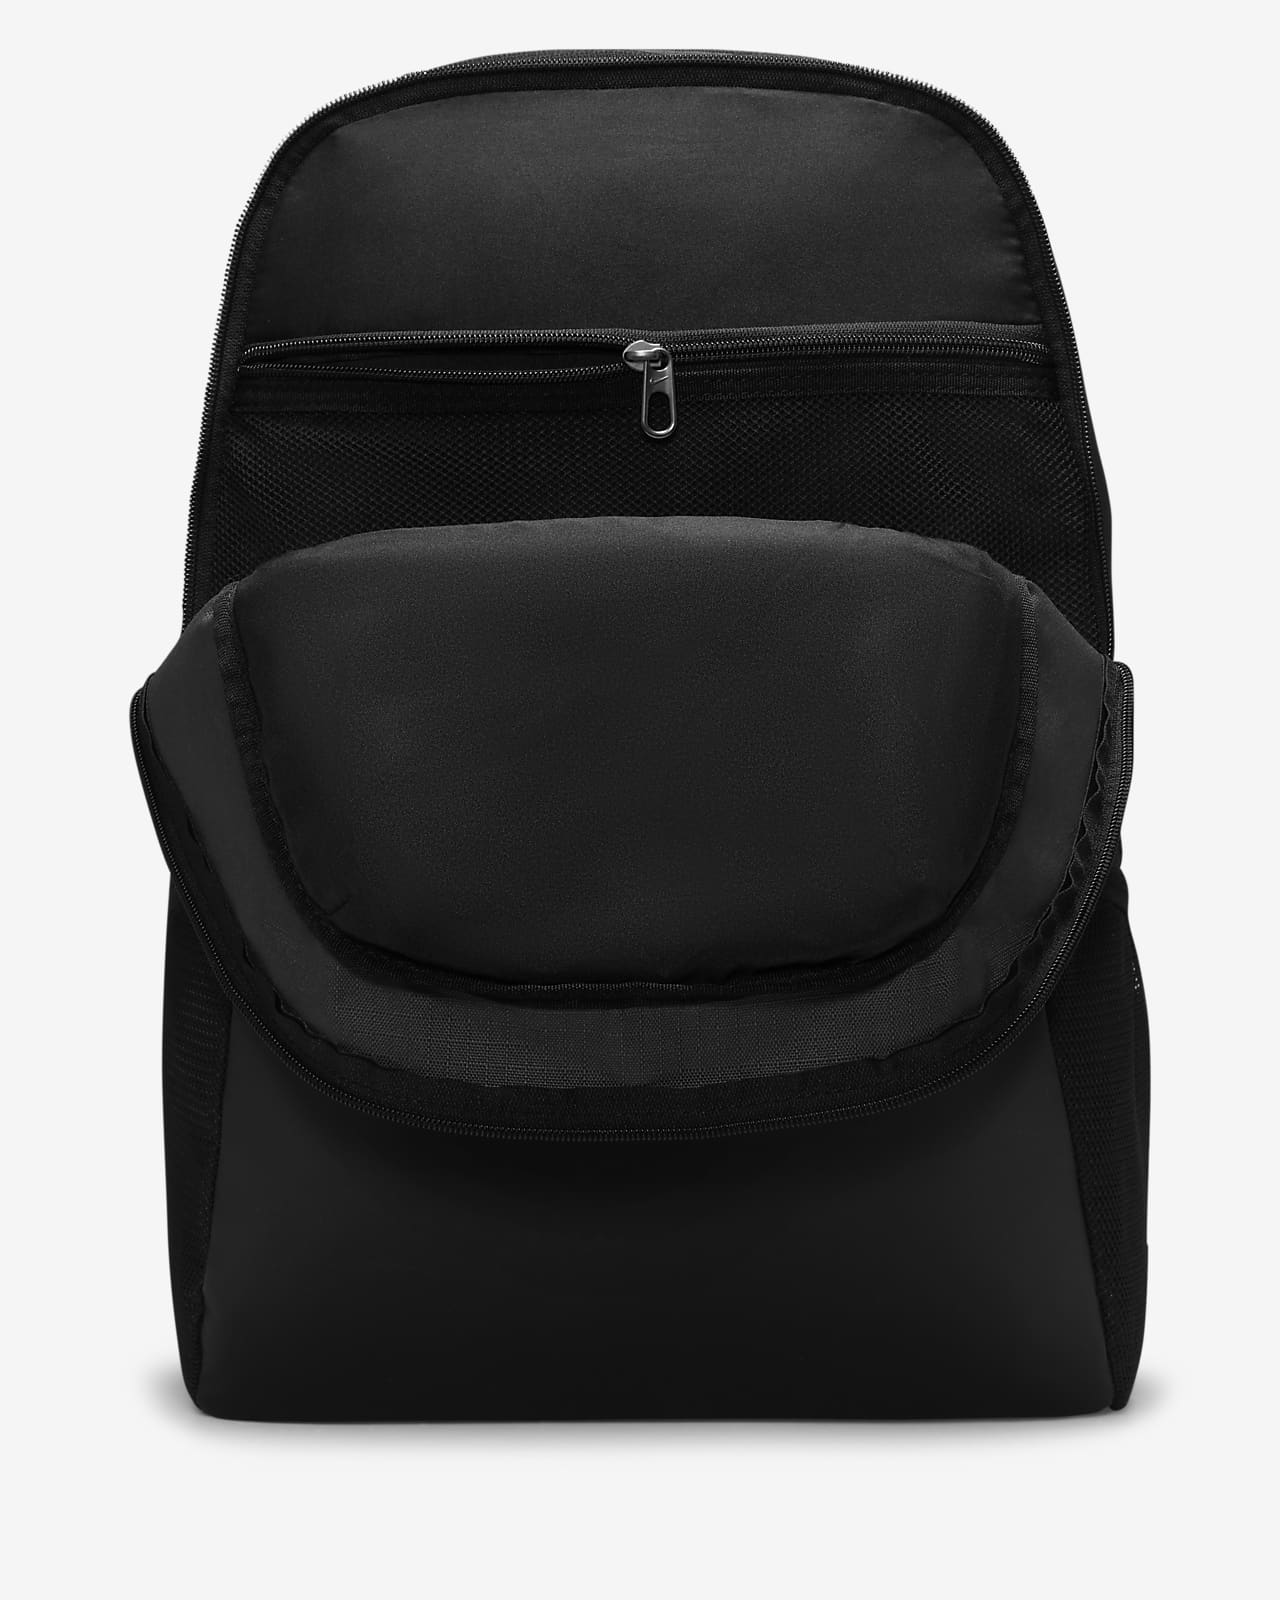 Buy Nike Brasilia Winterized Backpack Black, Schwarz Glänzend online